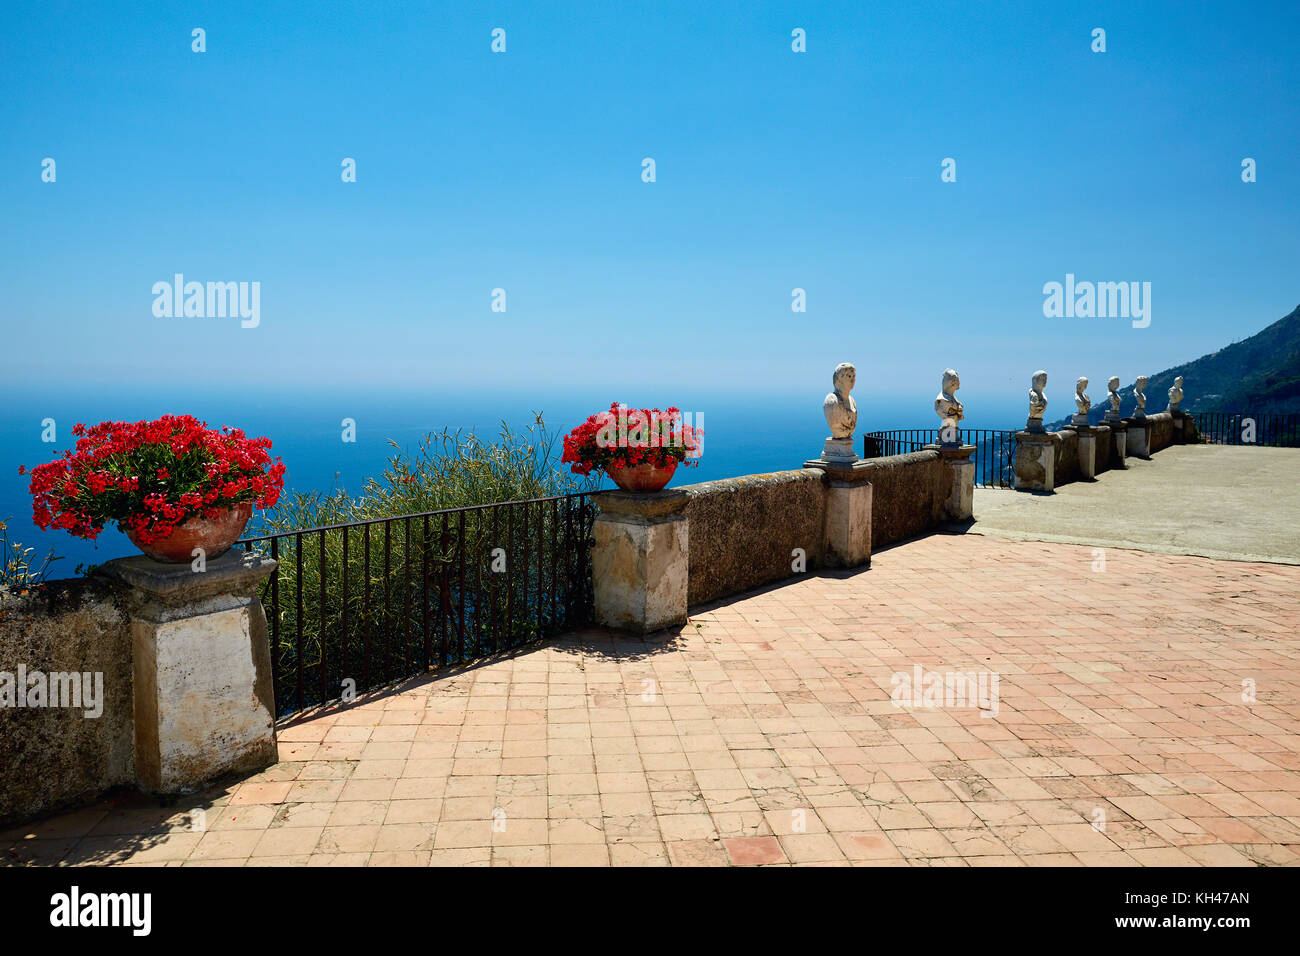 Terraza del infinito con macetas con flores y estatuas, Villa Cimbrone, Ravello, Campania, Italia. Foto de stock